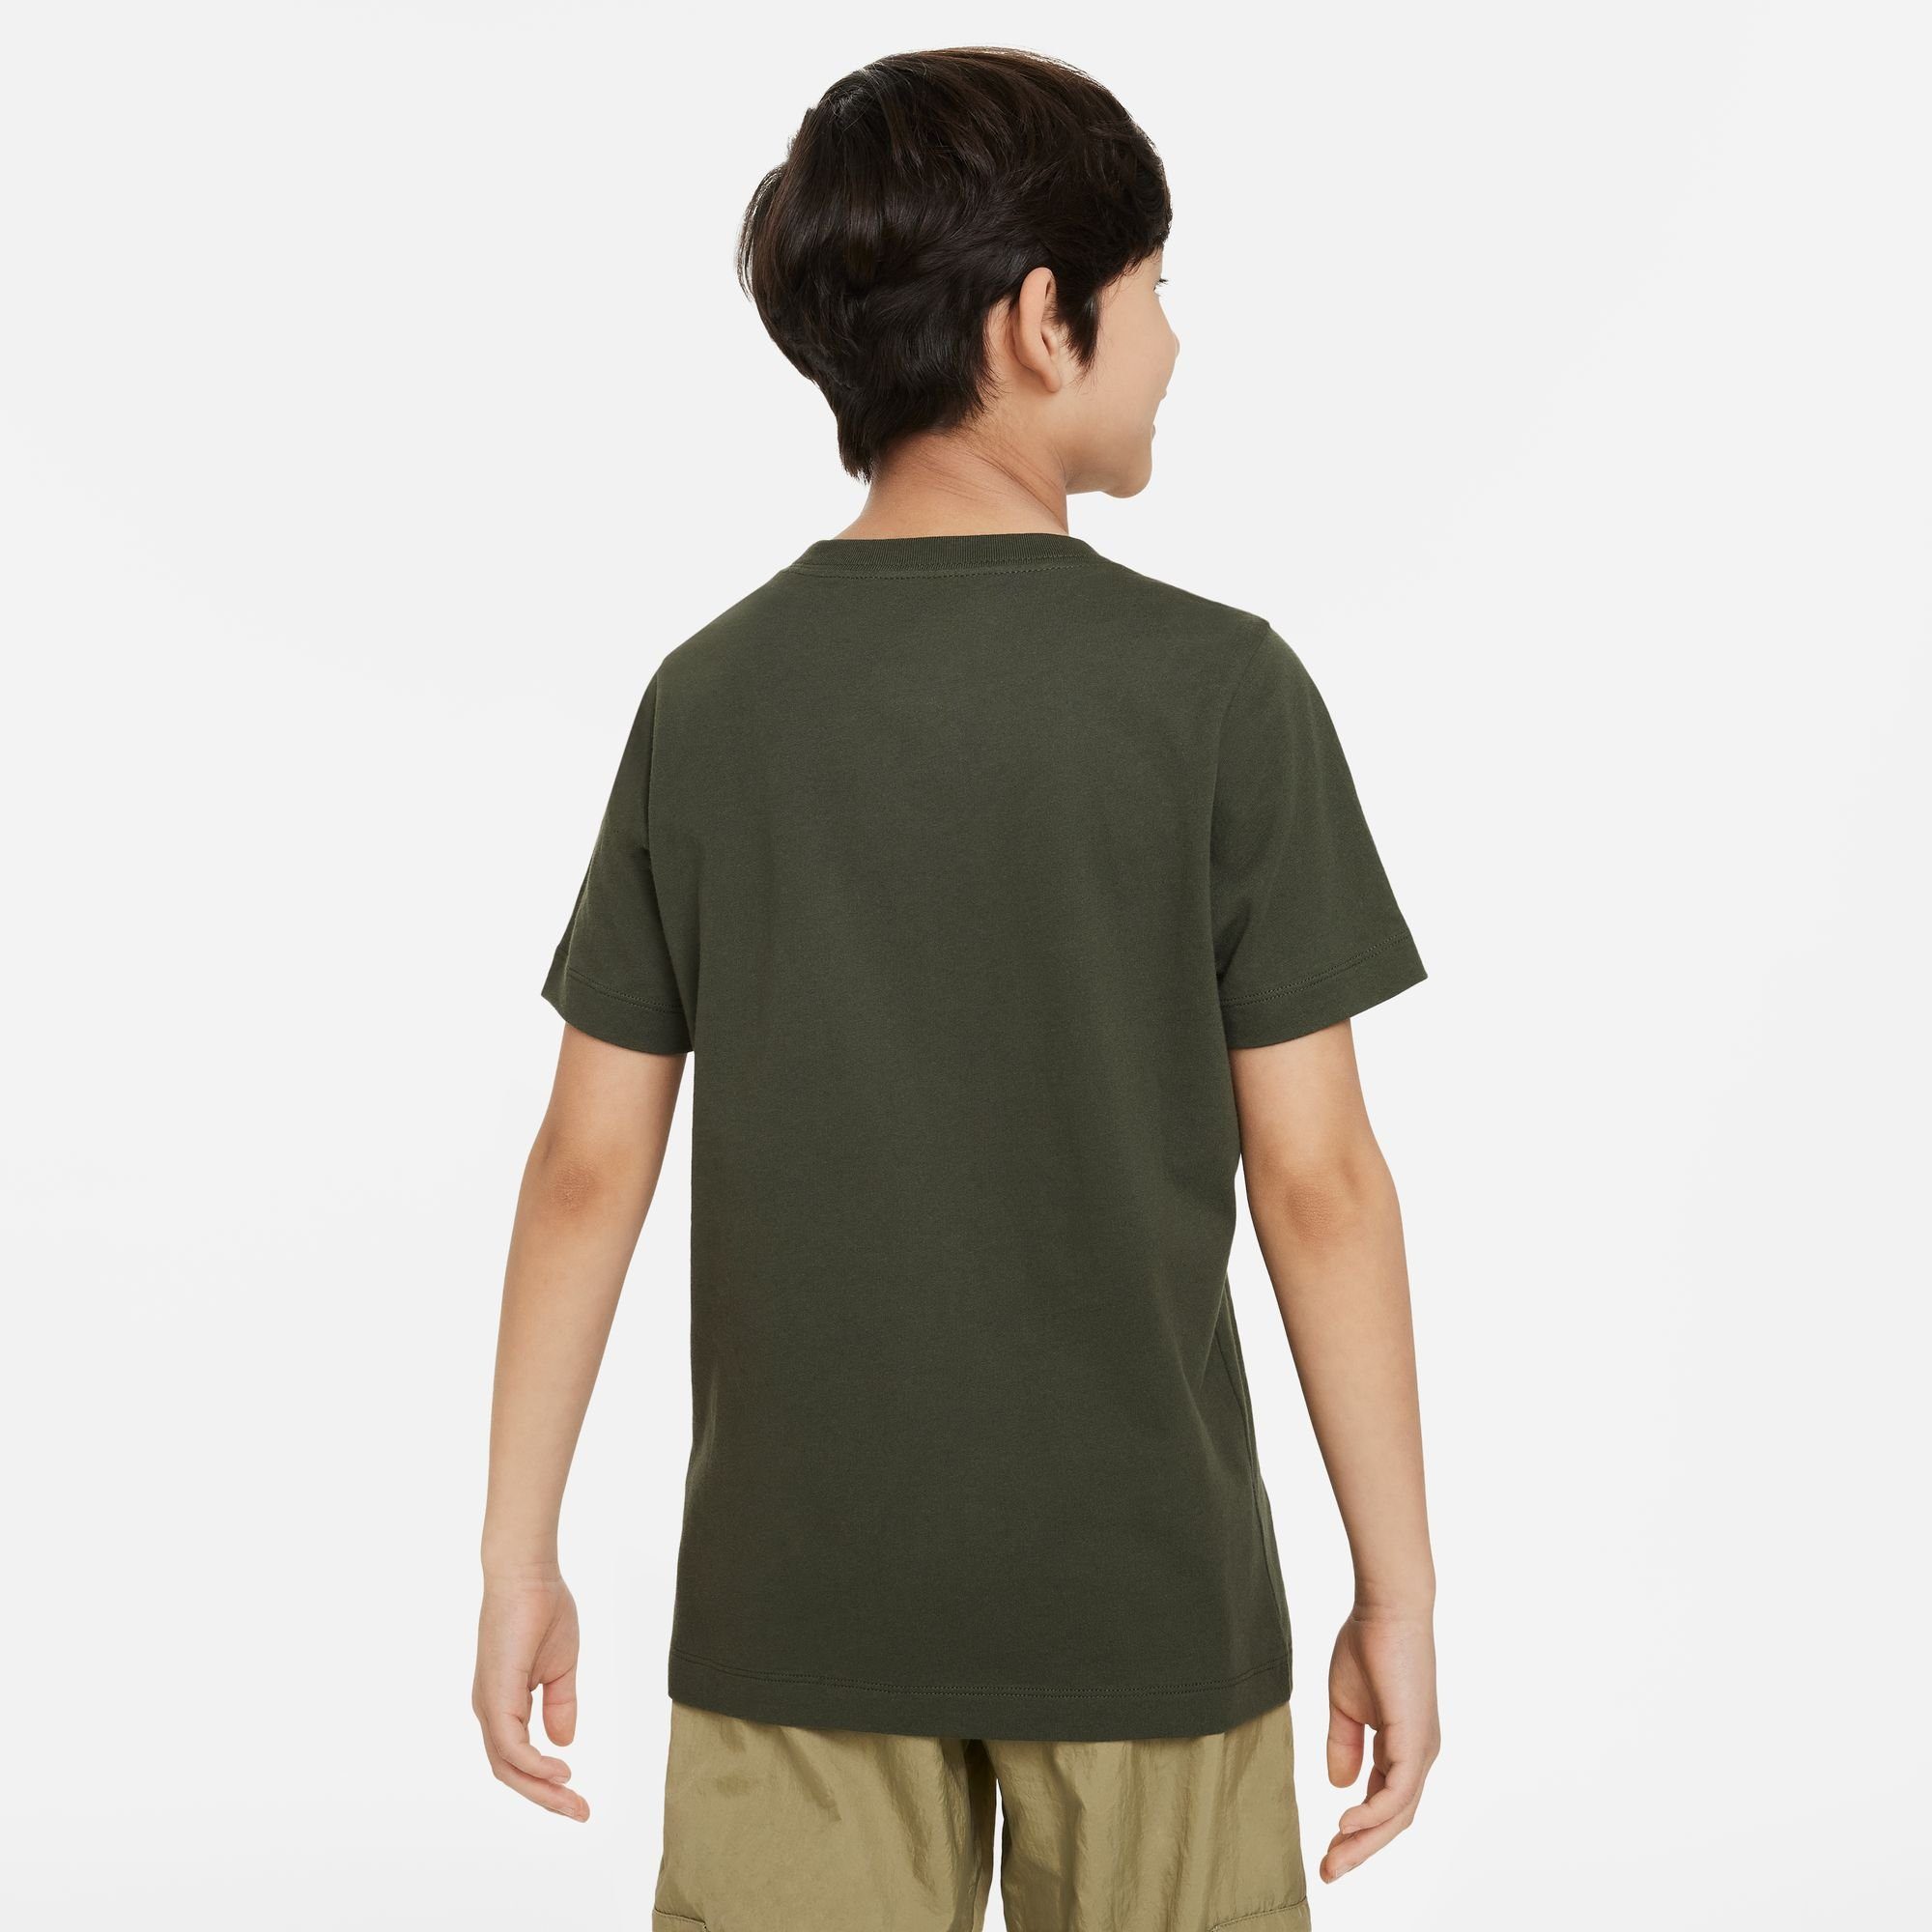 Sportswear T-Shirt Nike KHAKI/WHITE KIDS' BIG T-SHIRT CARGO